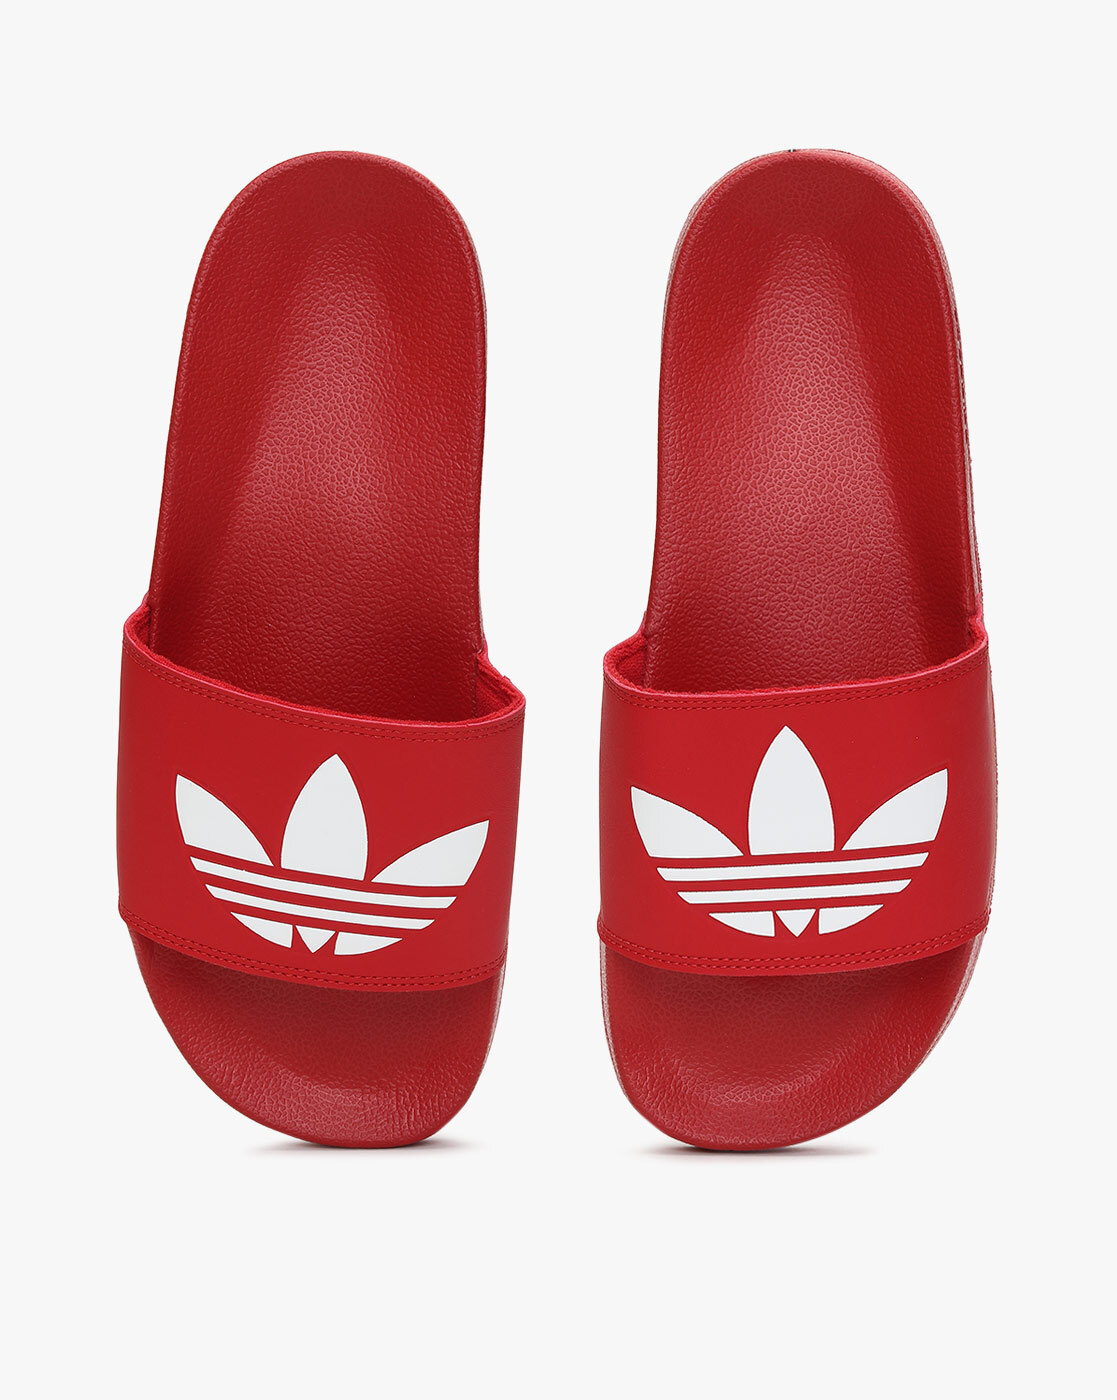 adidas Slides, Sandals & Flip Flops | Free Curbside Pickup at DICK'S